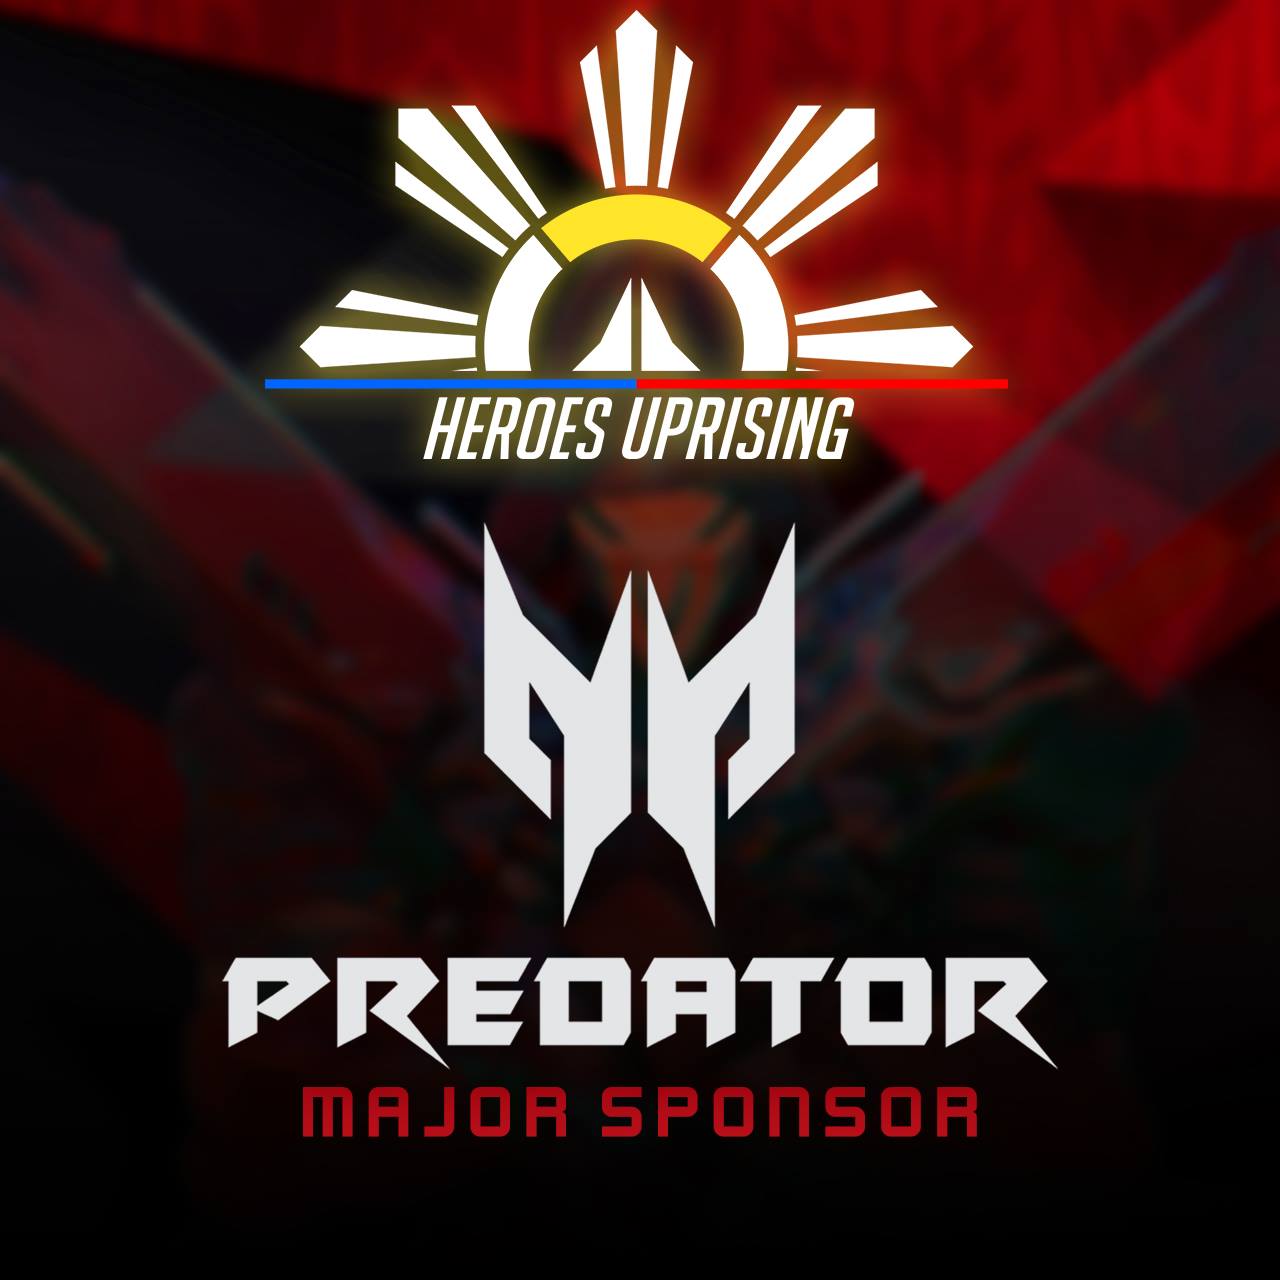 Acer Predator joins Overwatch Tournament Heroes Uprising 2017 as Major Sponsor